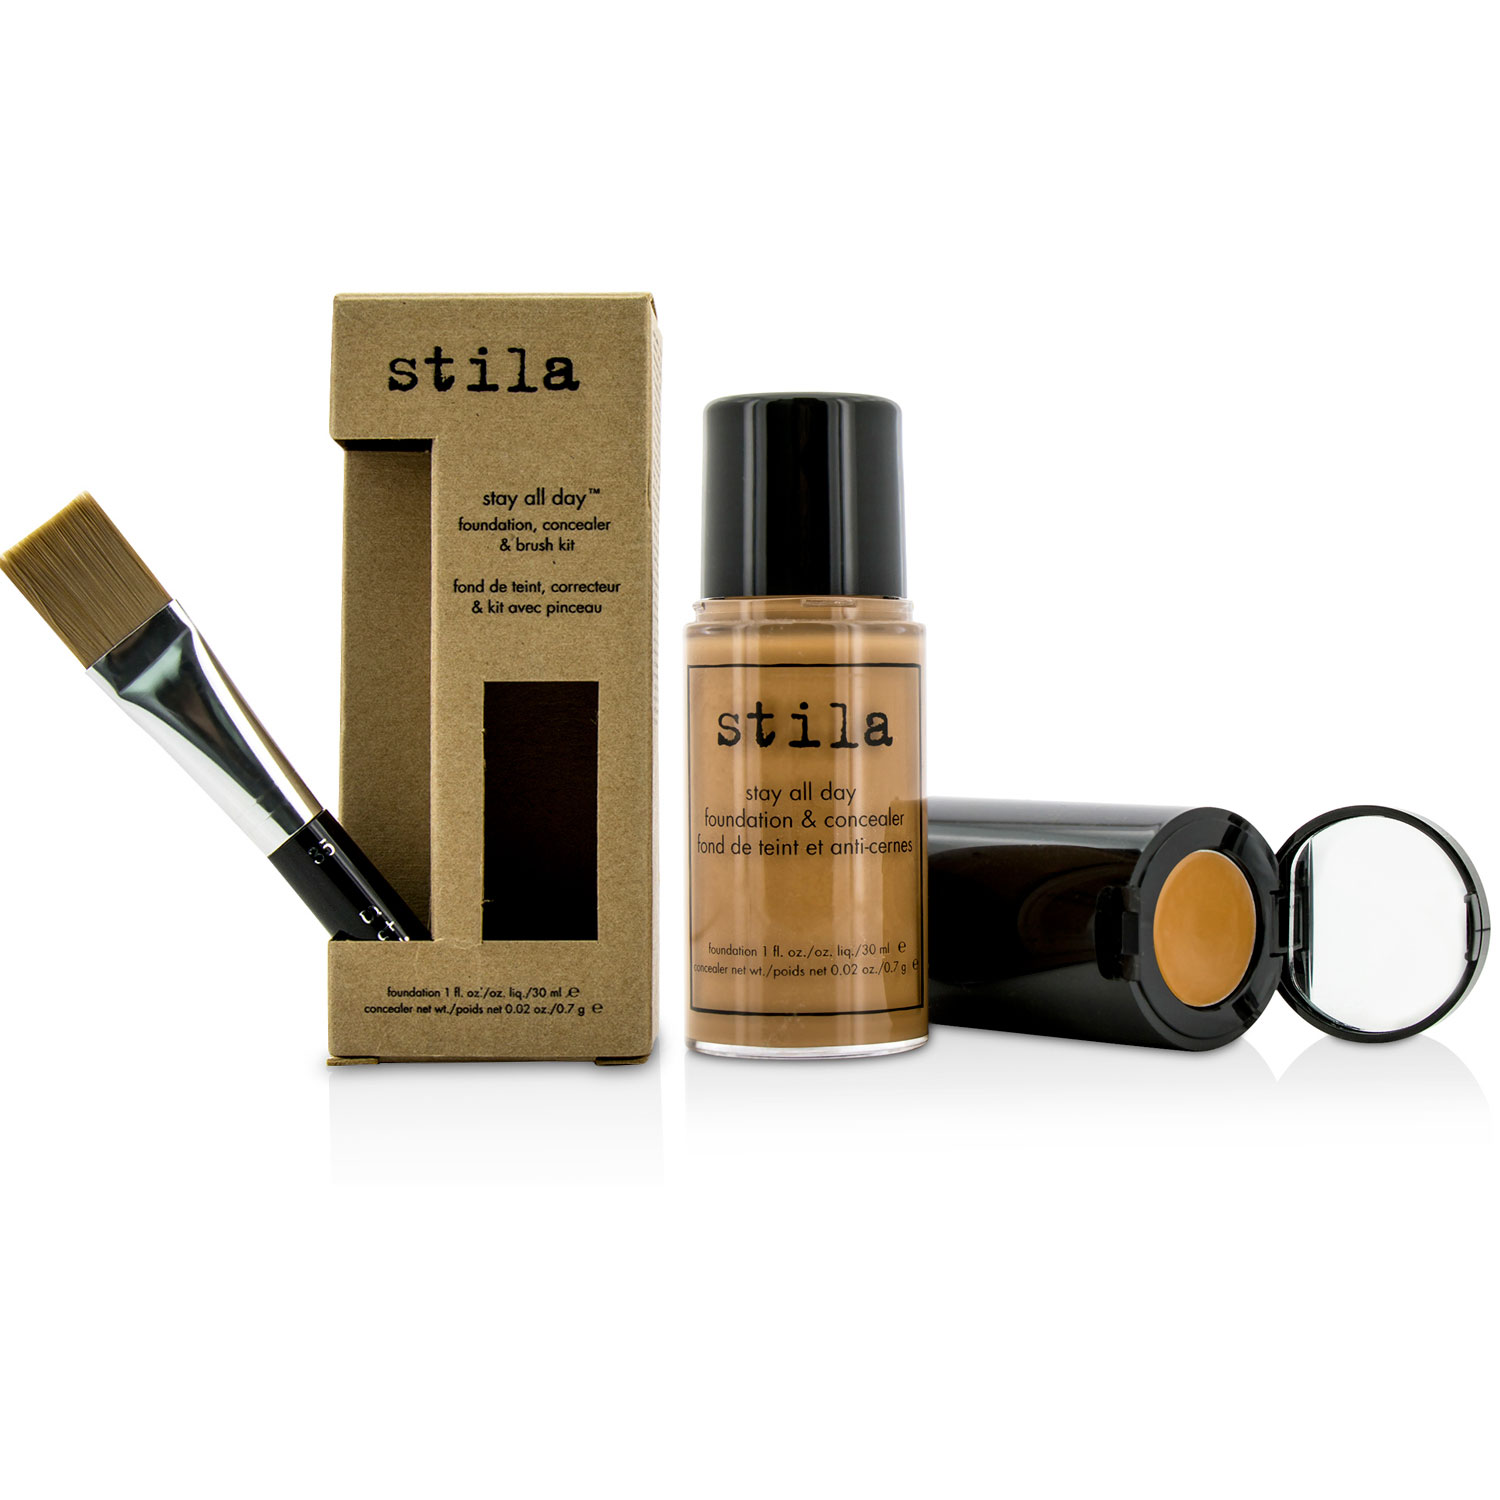 Stay All Day Foundation Concealer  Brush Kit - # 12 Tan (Box Slightly Damaged) Stila Image